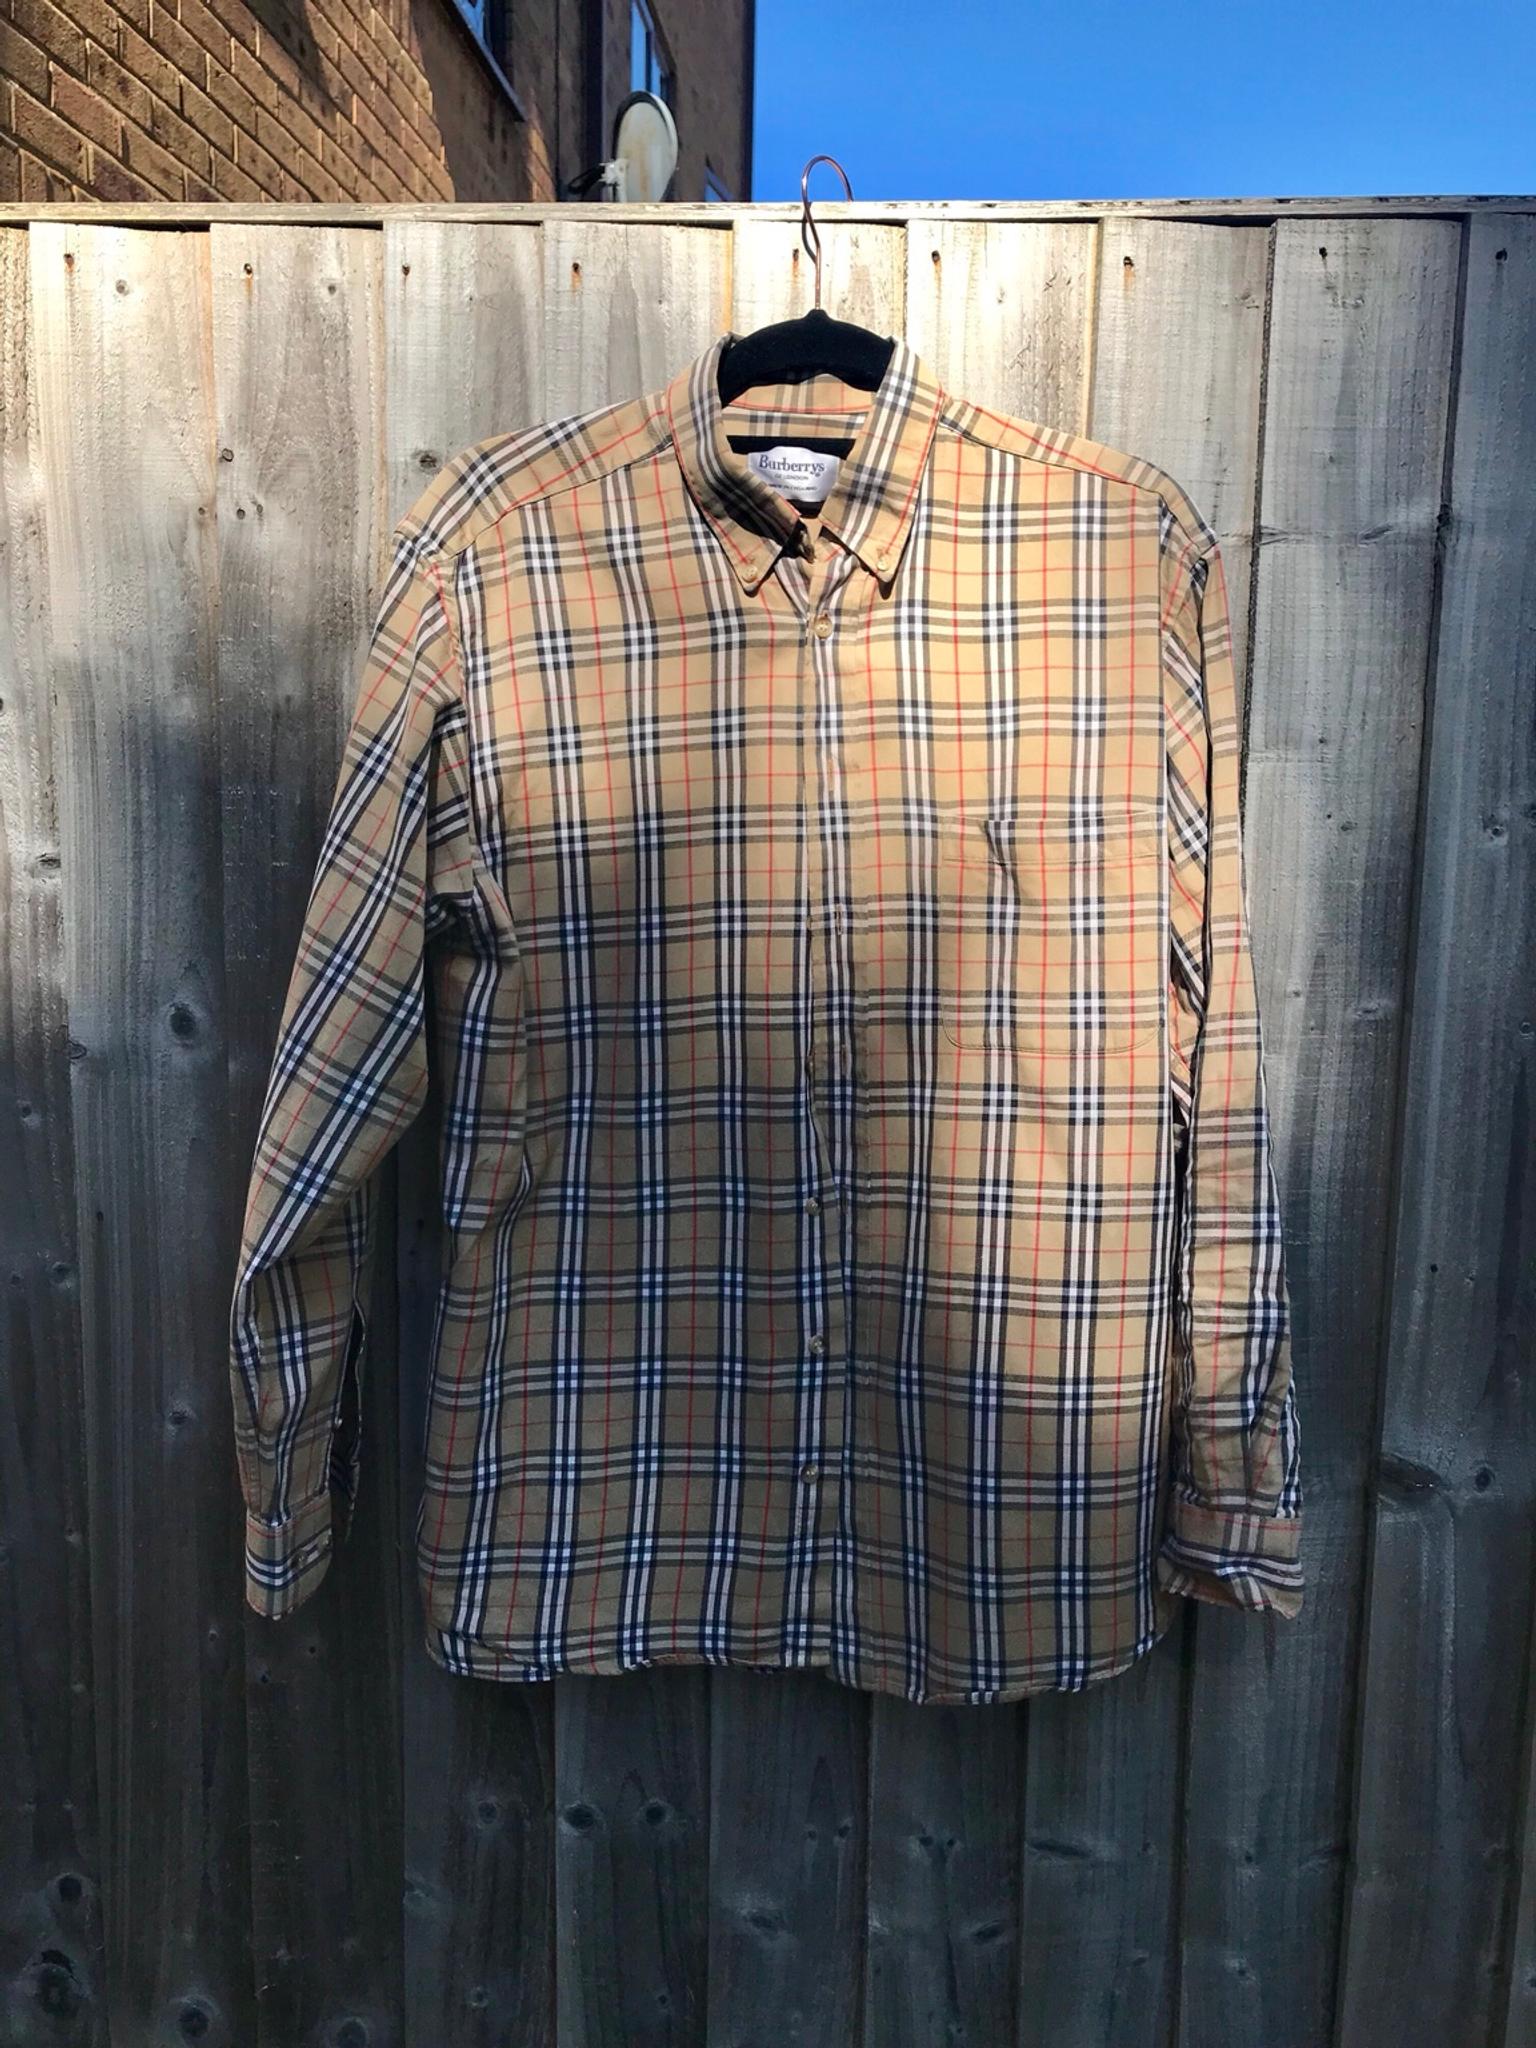 burberry shirt pattern